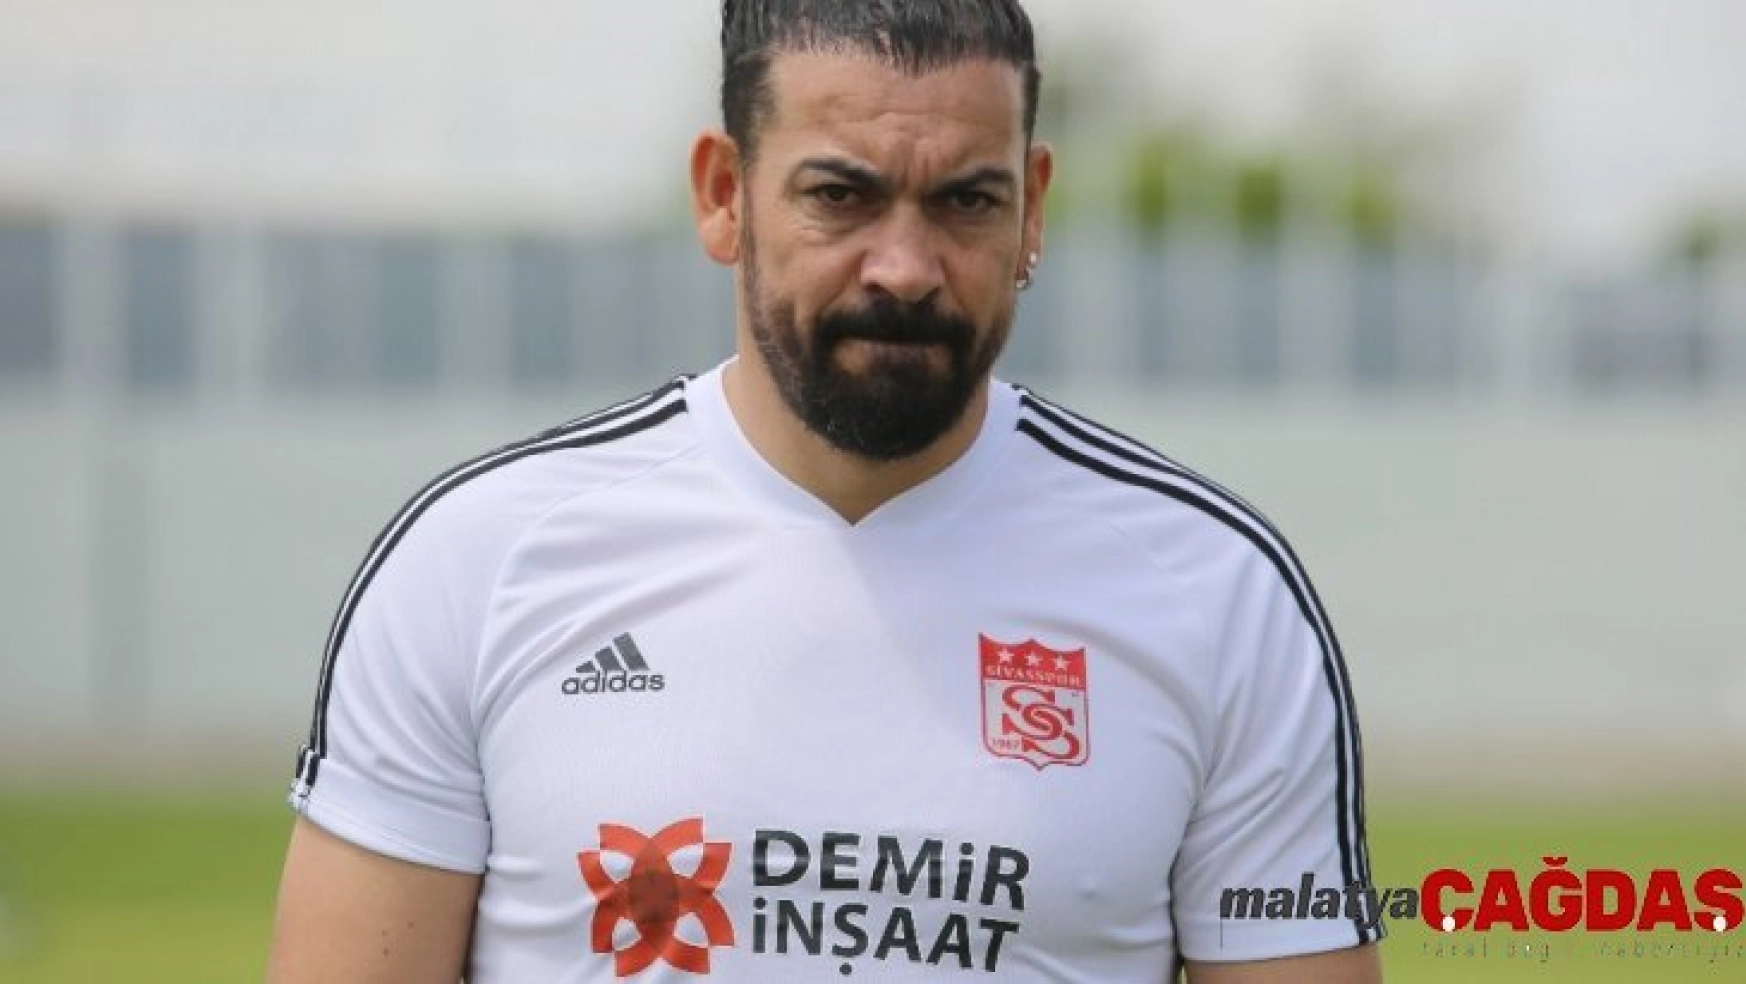 Servet Çetin: 'Sivasspor ligde olmazsa olmaz'